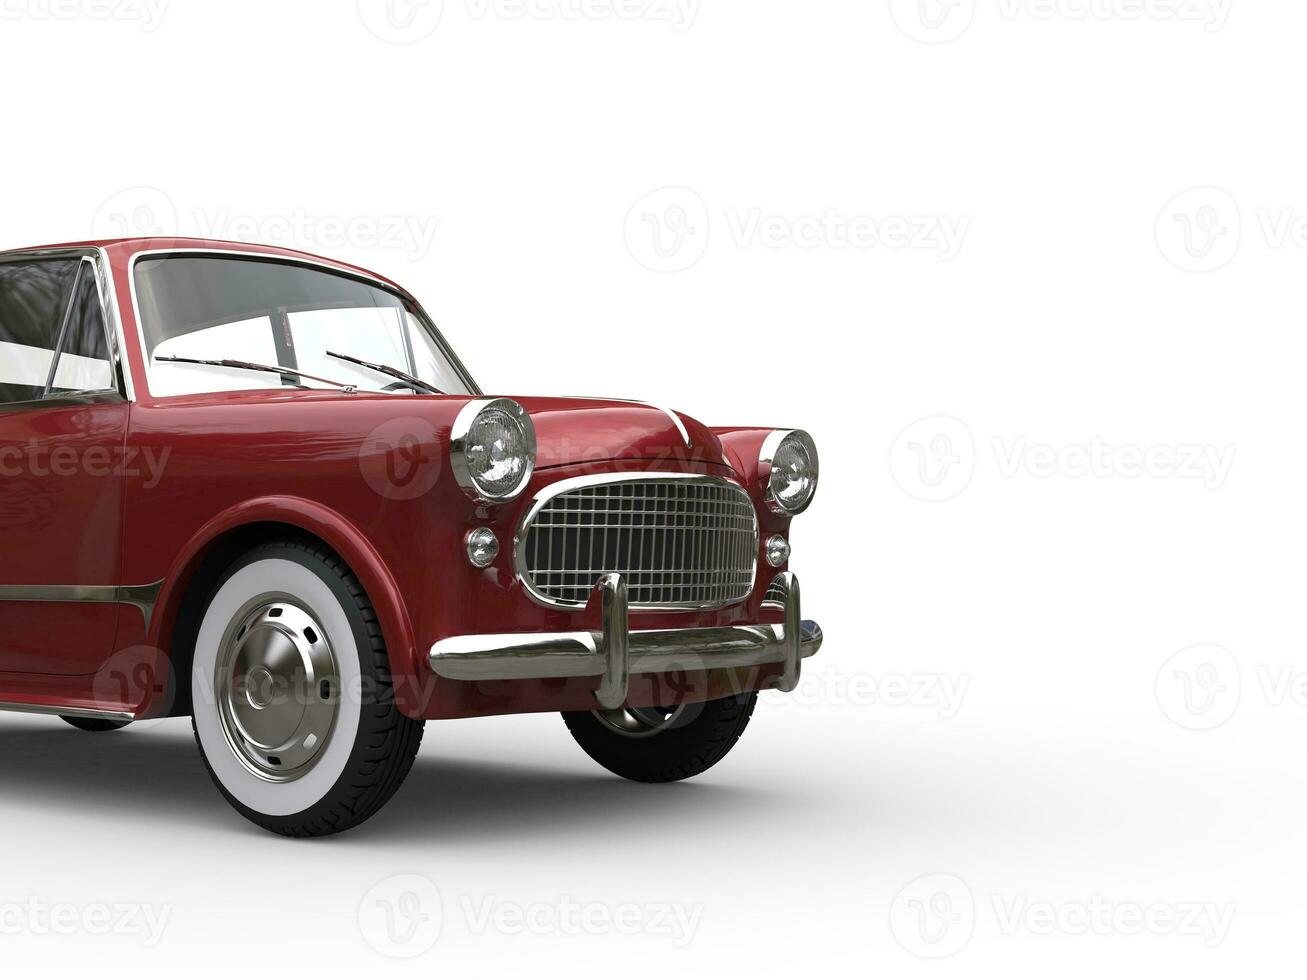 Metallic cherry red vintage small compact car - closeup cut shot photo